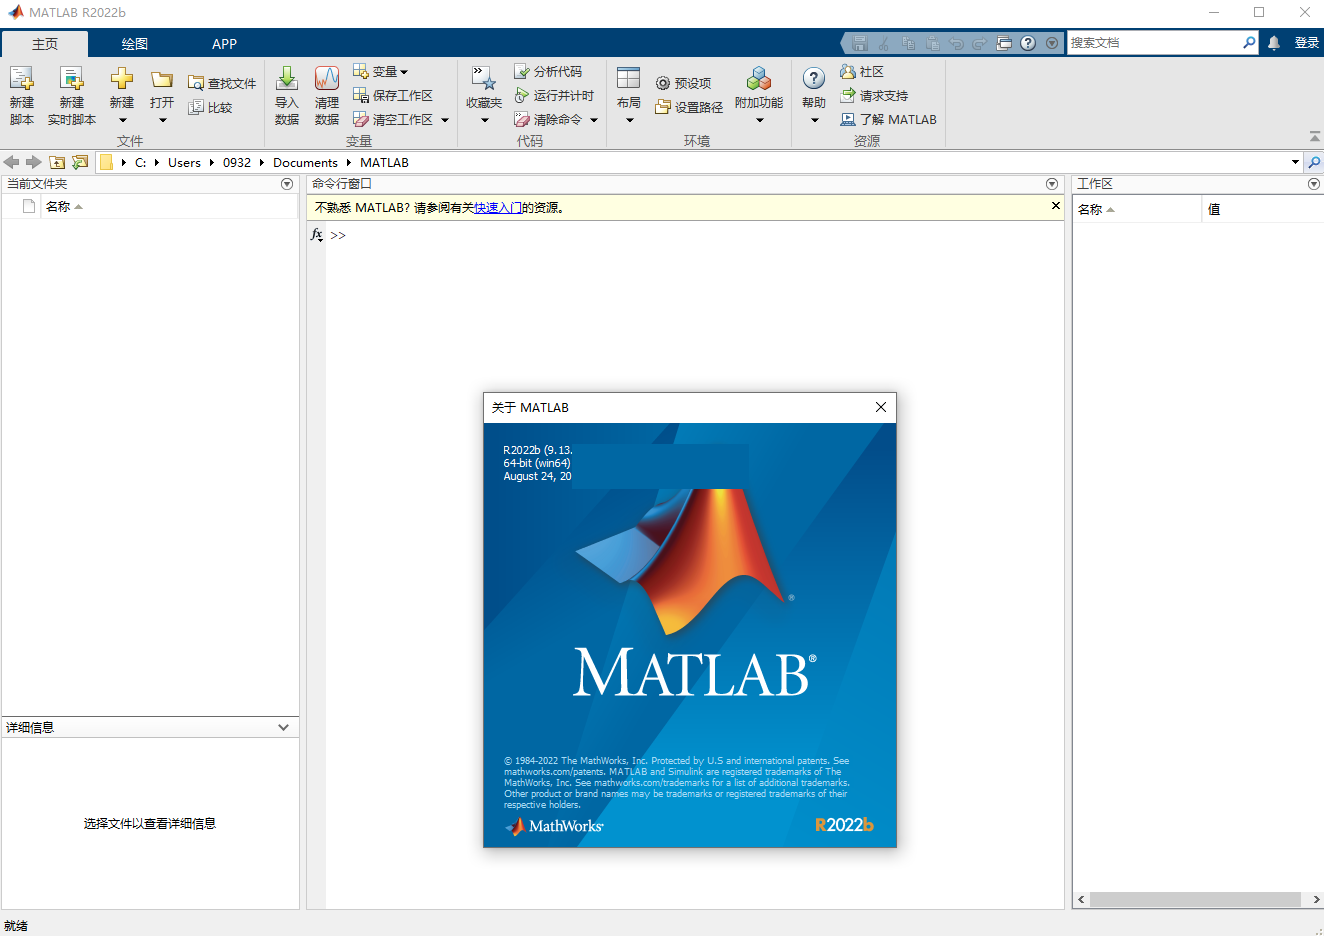 Matlab 2022b Mac破解版下载 Mathworks Matlab R2022b (9.13.0) MacOS中文破解版(附许可文件+安装密钥) 下载-